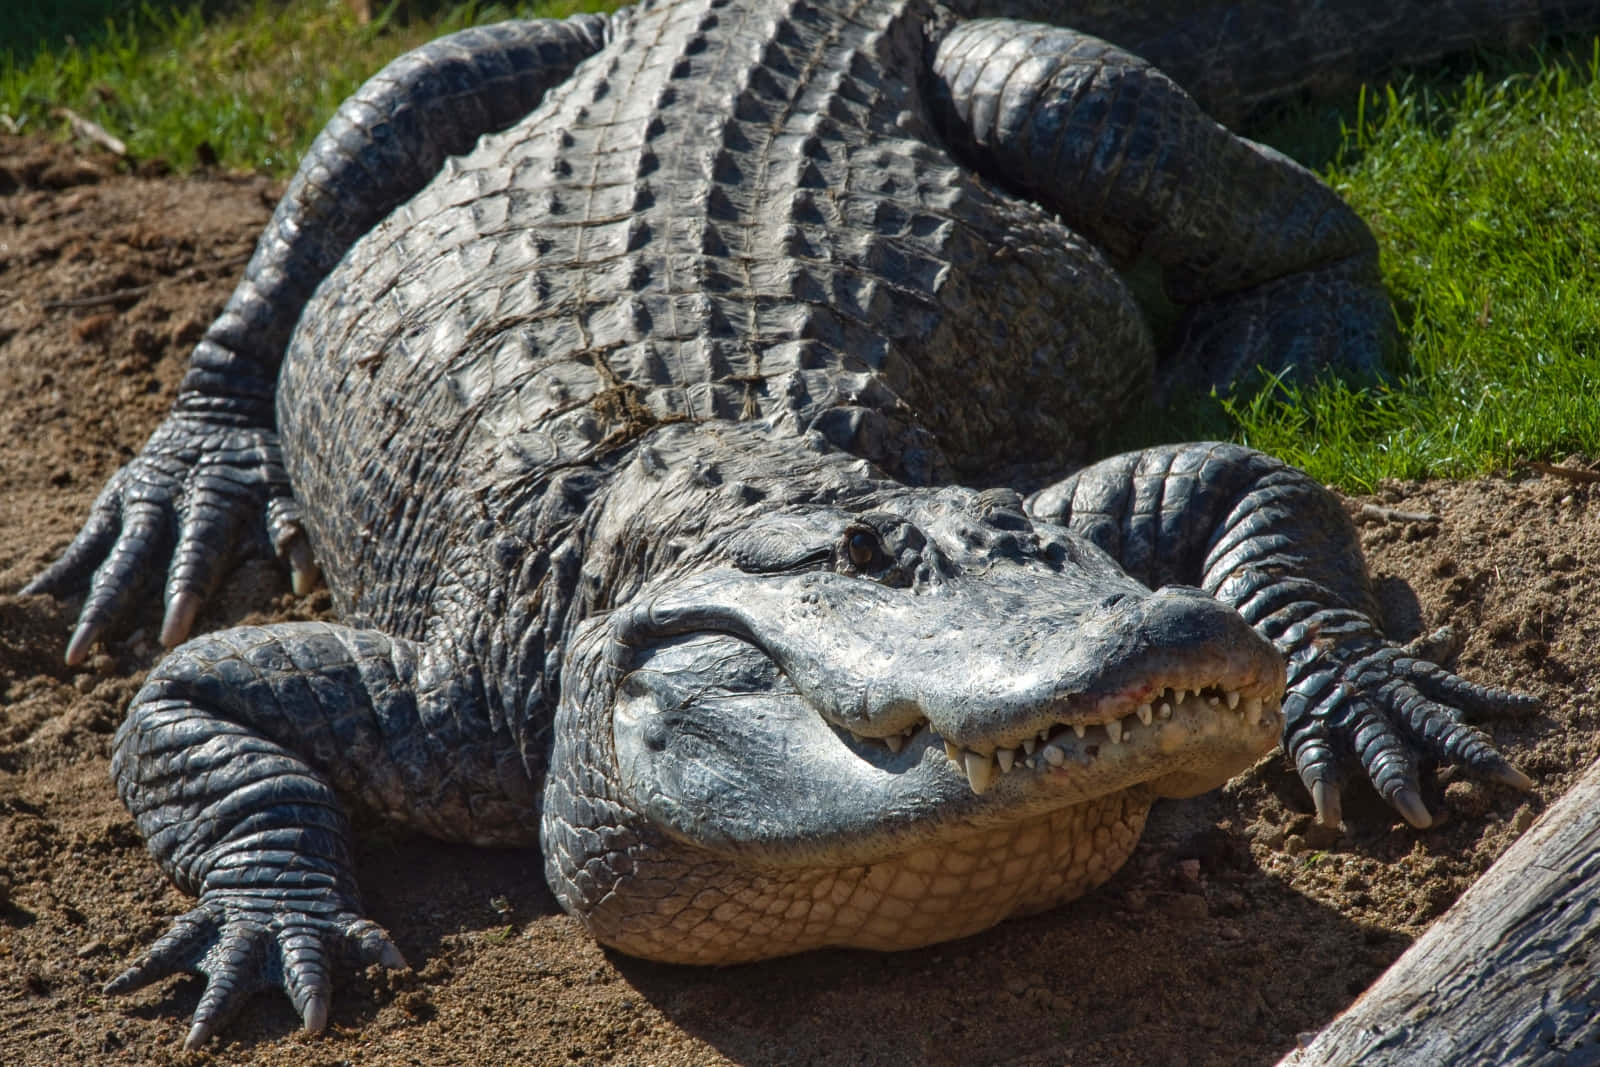 A curious alligator exploring its natural habitat.